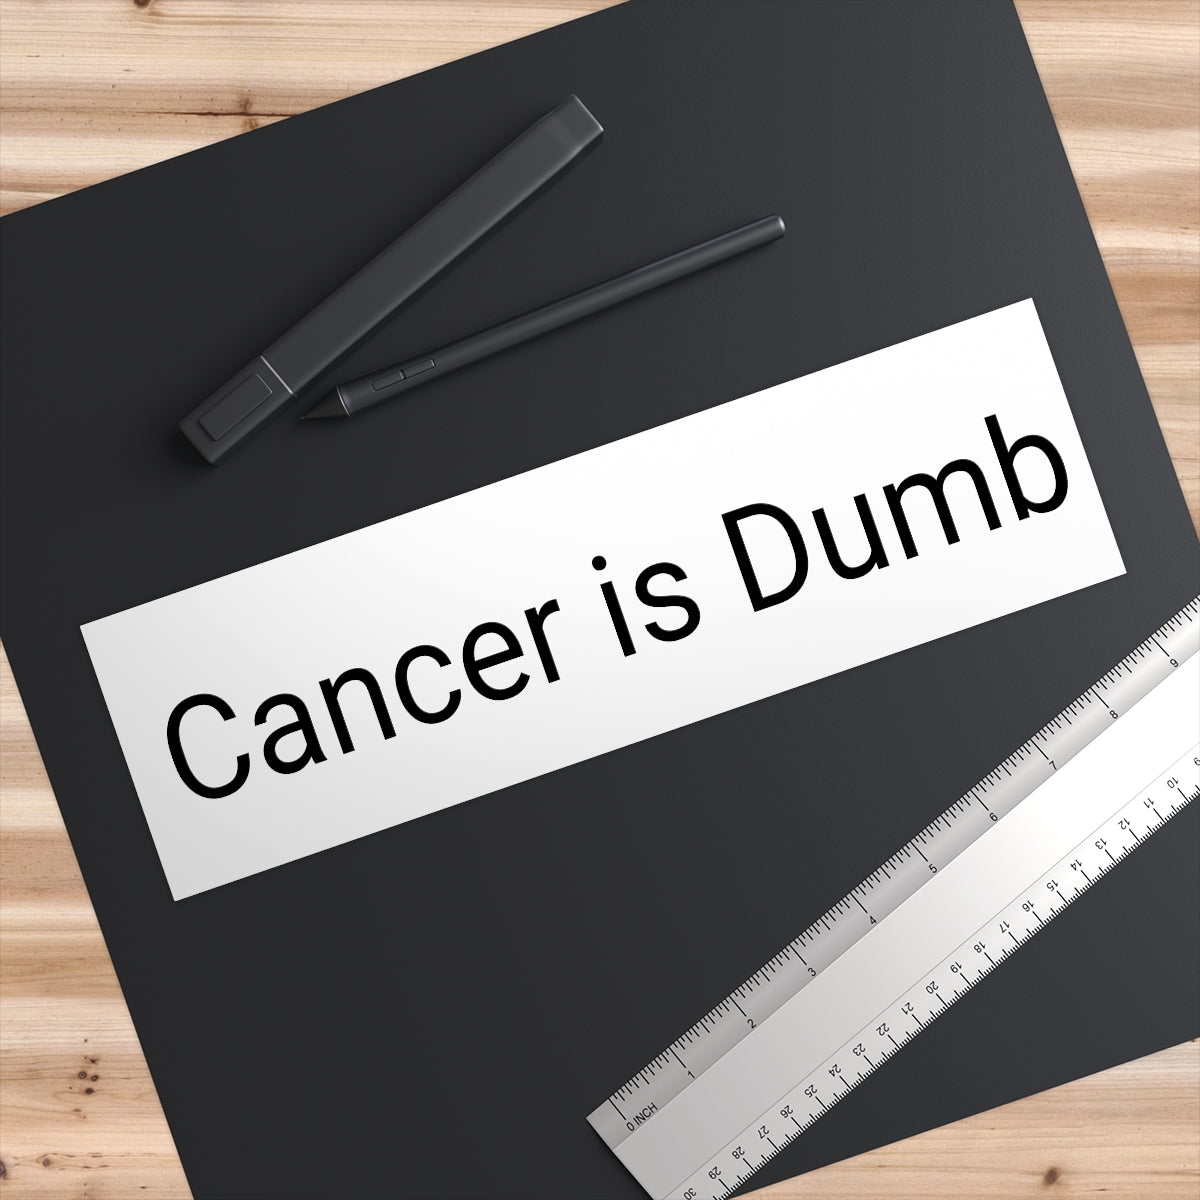 Bumper Stickers Anti Cancer Survivor Cancer is Dumb